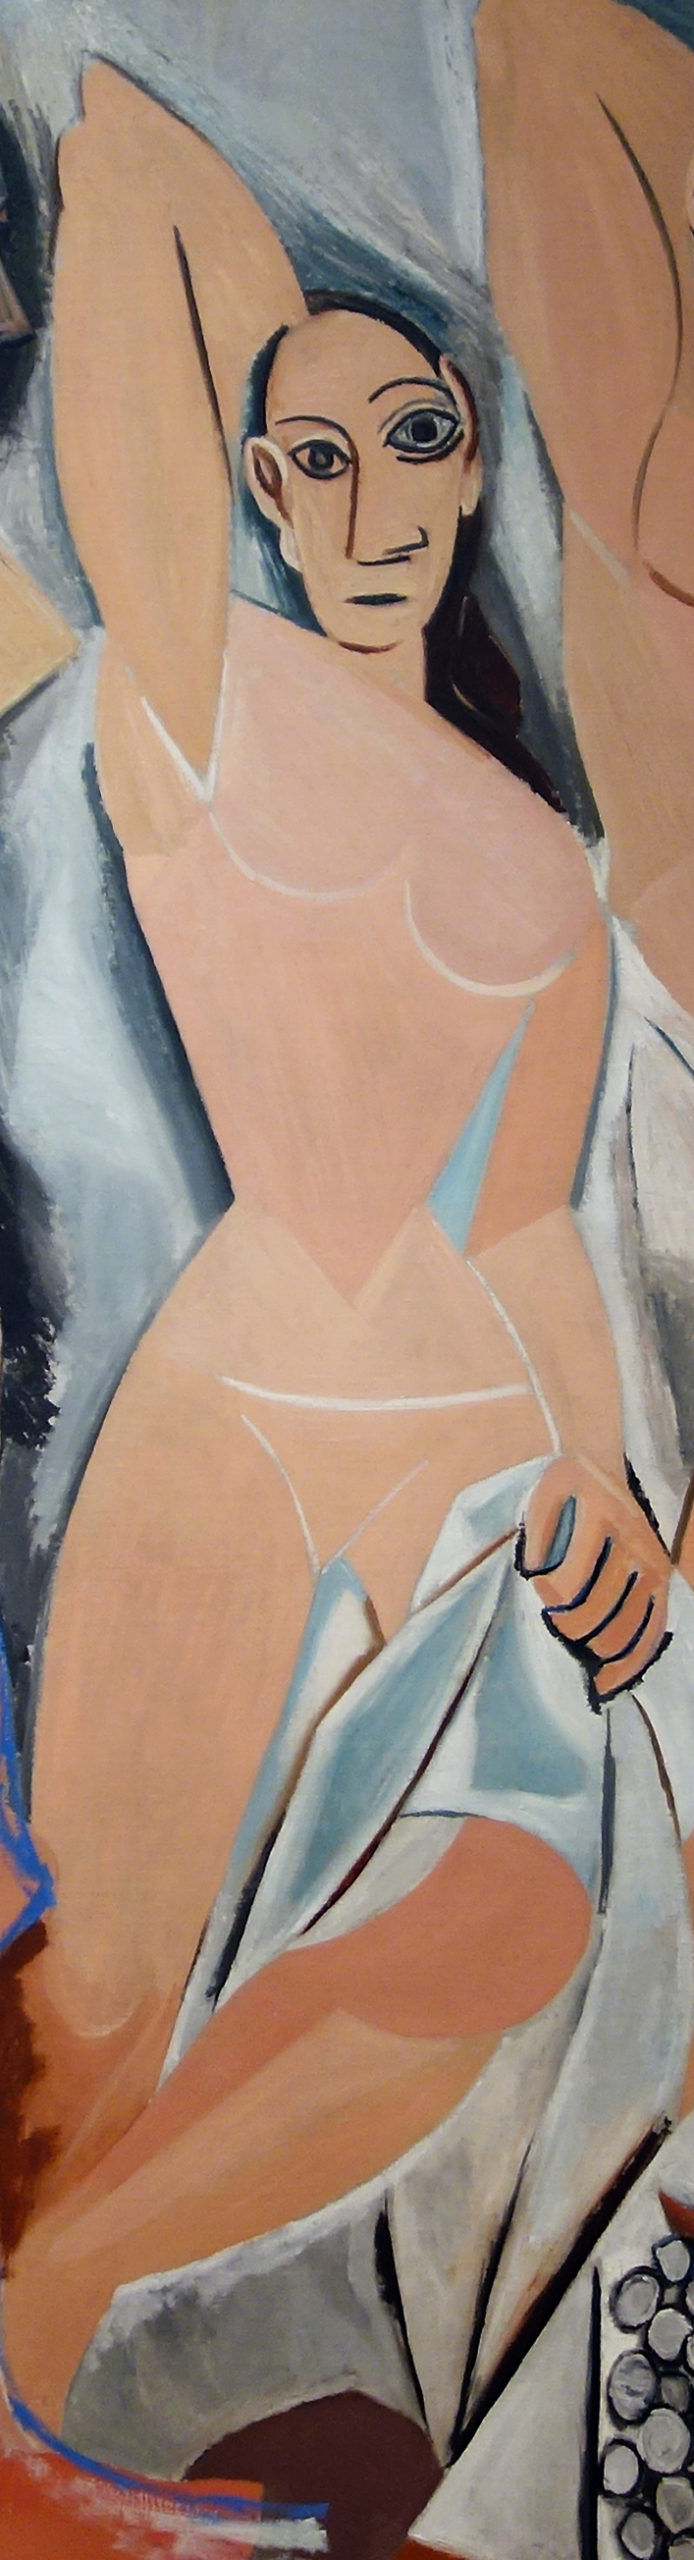 Detail, Pablo Picasso, <em>Les Demoiselles d'Avignon</em>, 1907, oil on canvas, 8' x 7' 8" (243.9 x 233.7 cm) (Museum of Modern Art, New York, photo: Steven Zucker, CC BY-NC-SA 2.0)